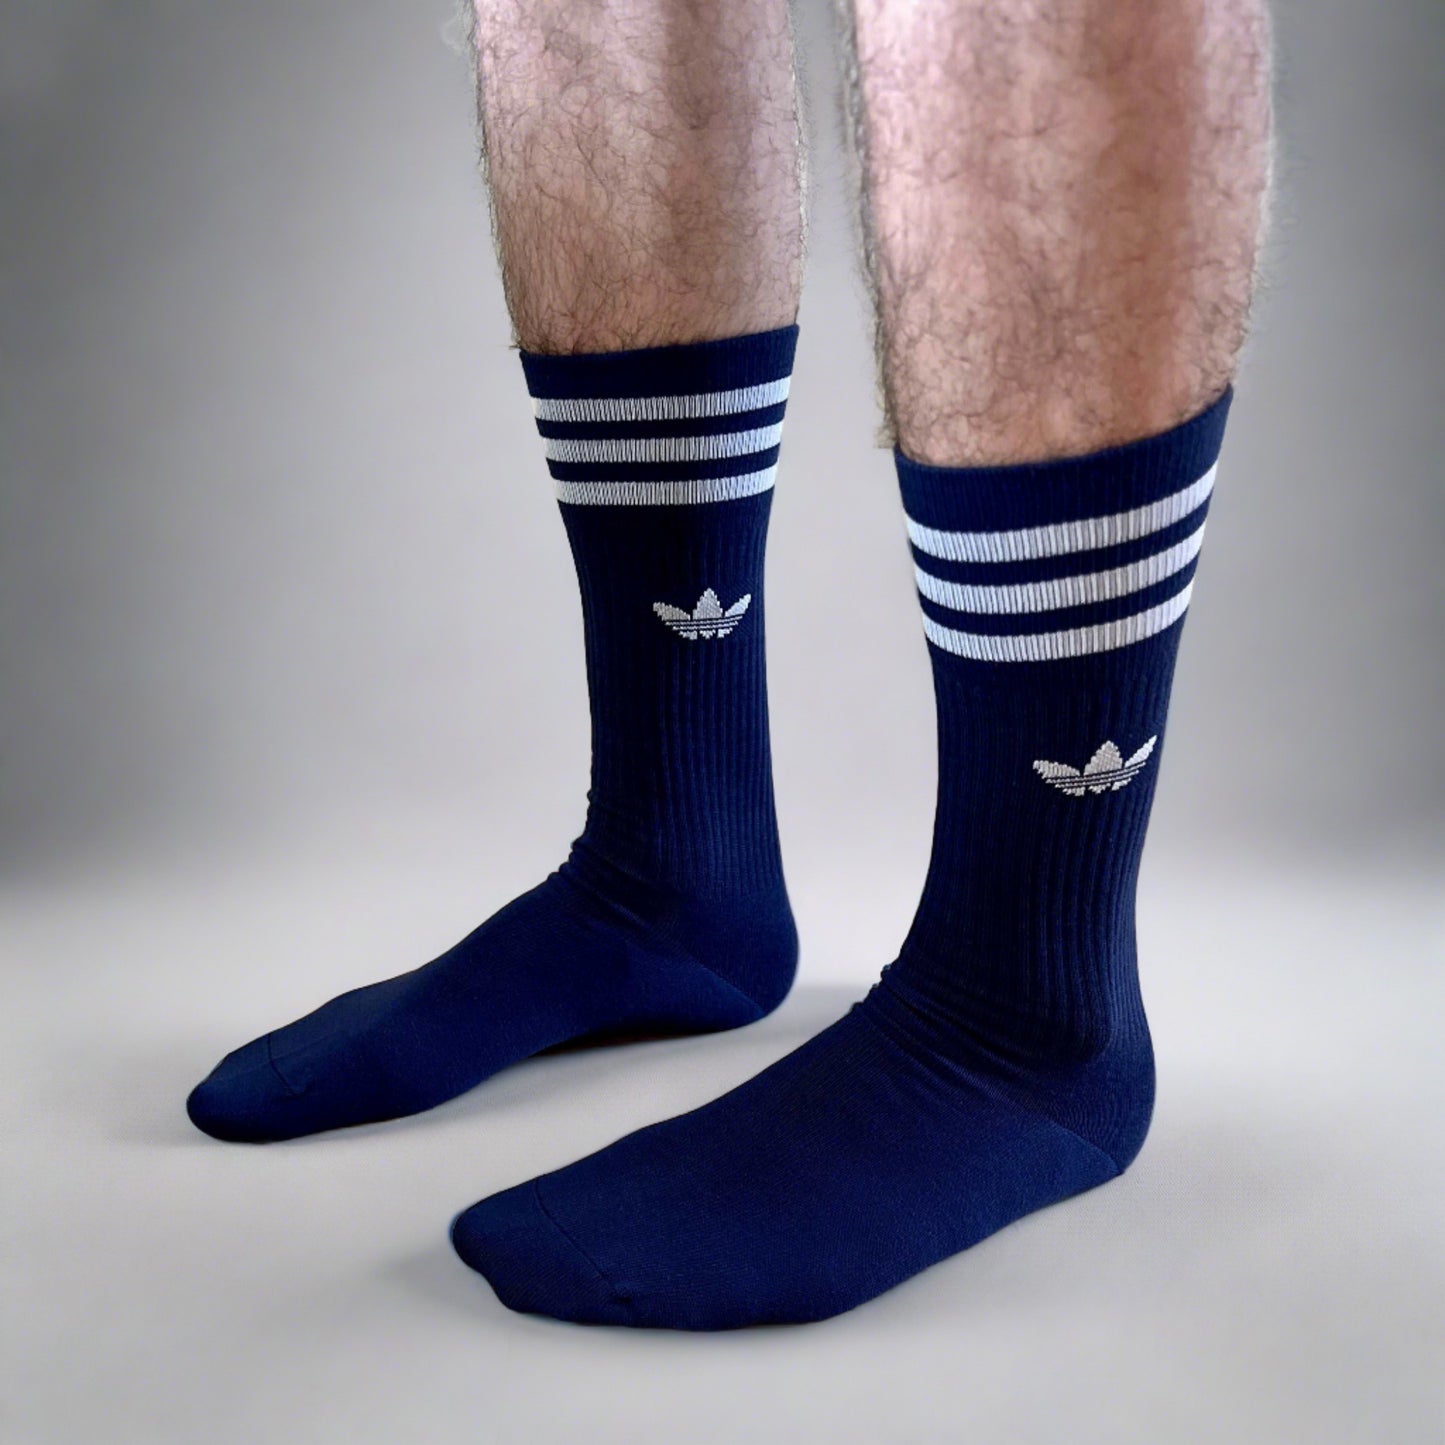 Adidas Crew Socks - Navy Blue & White